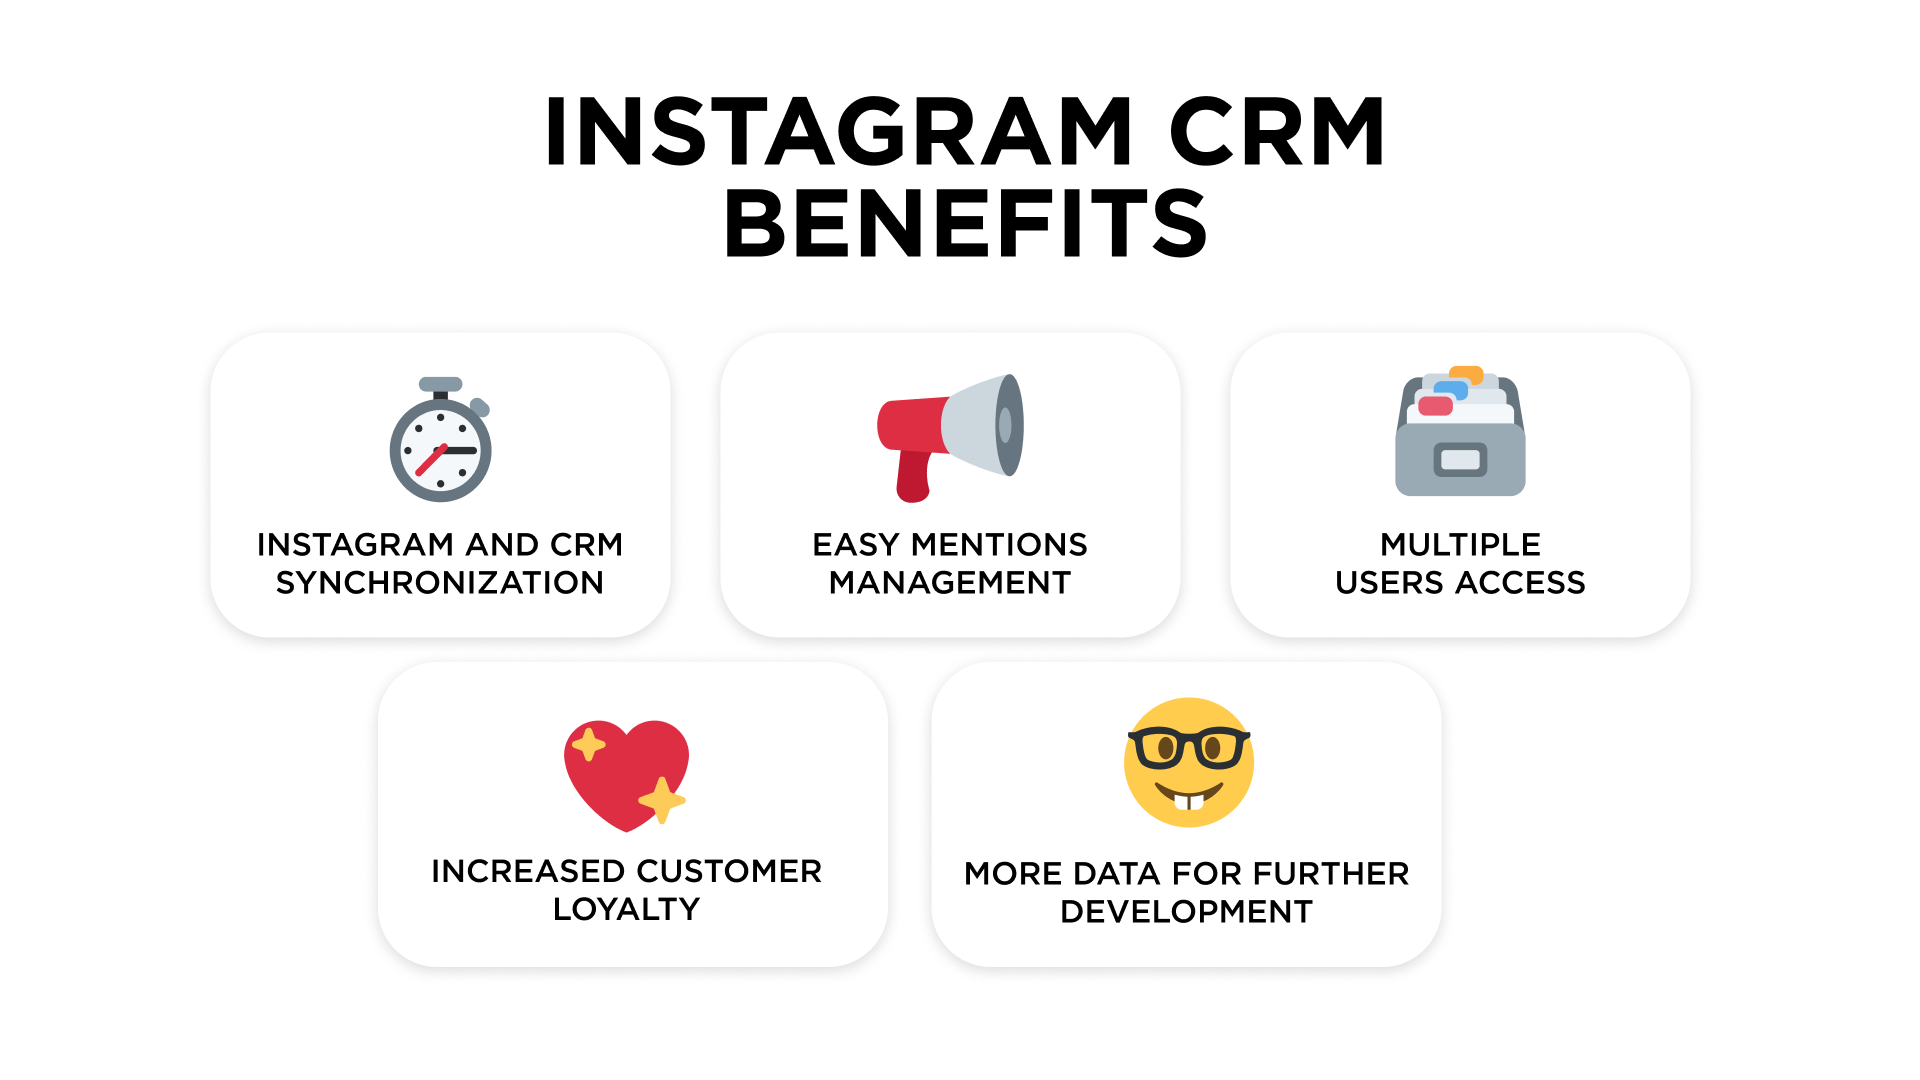 Major Instagram CRM advantages for business